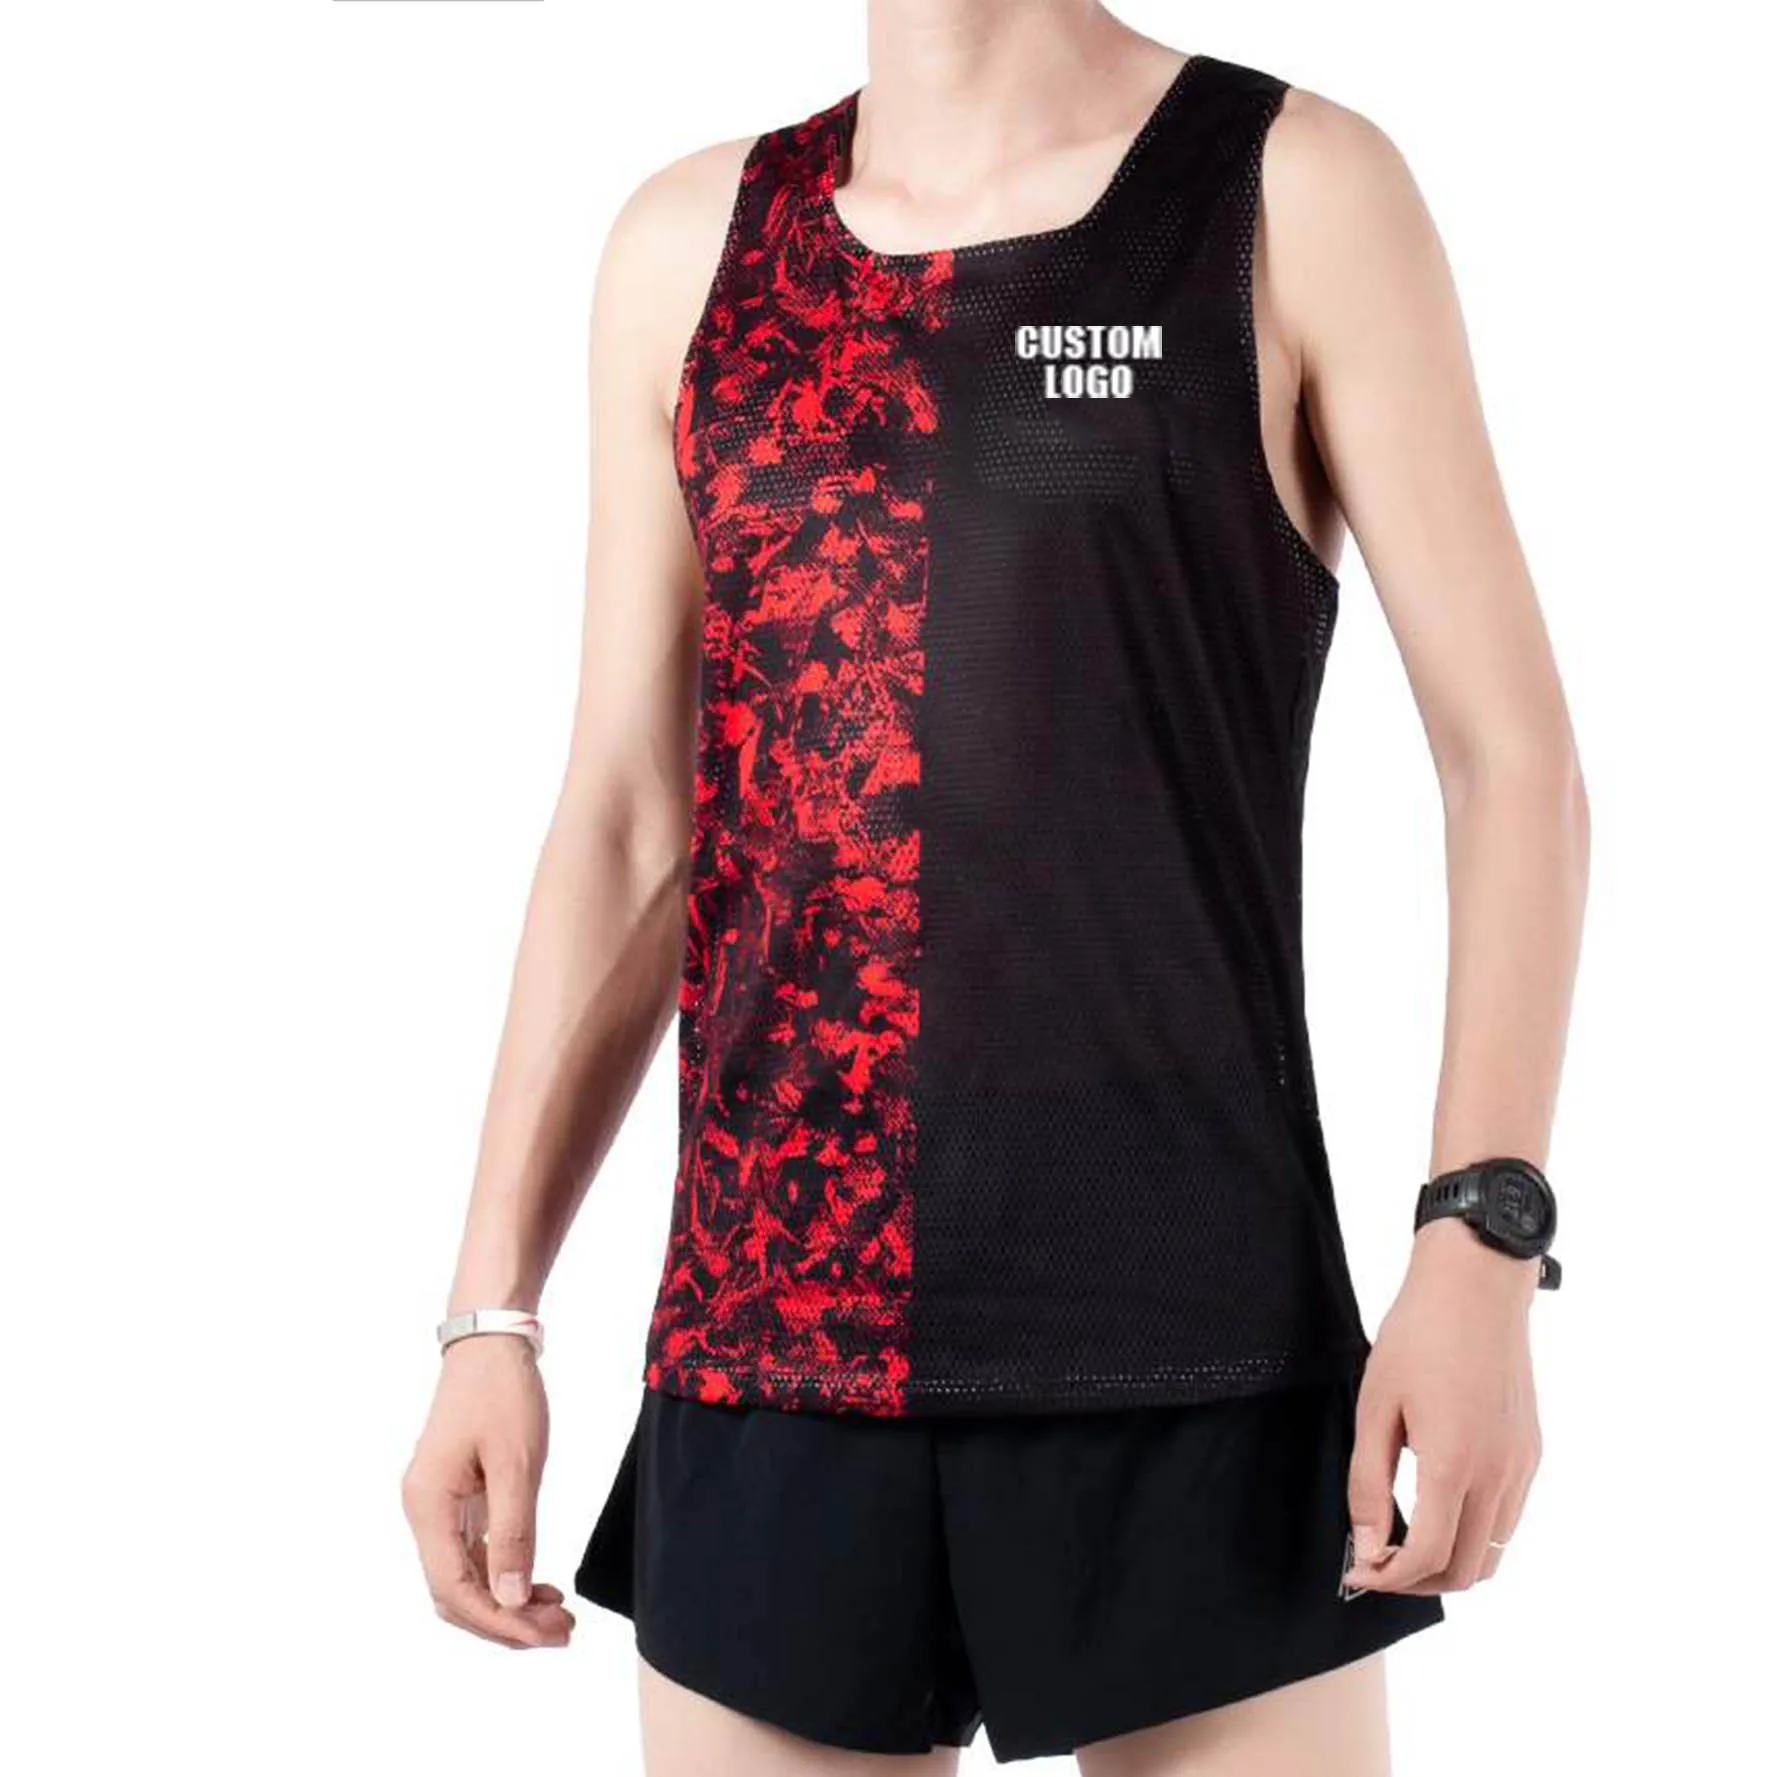 Men Fashion Sleeveless Vest Elastic Sports Fitness Close Fitting Running Marathon Singlets